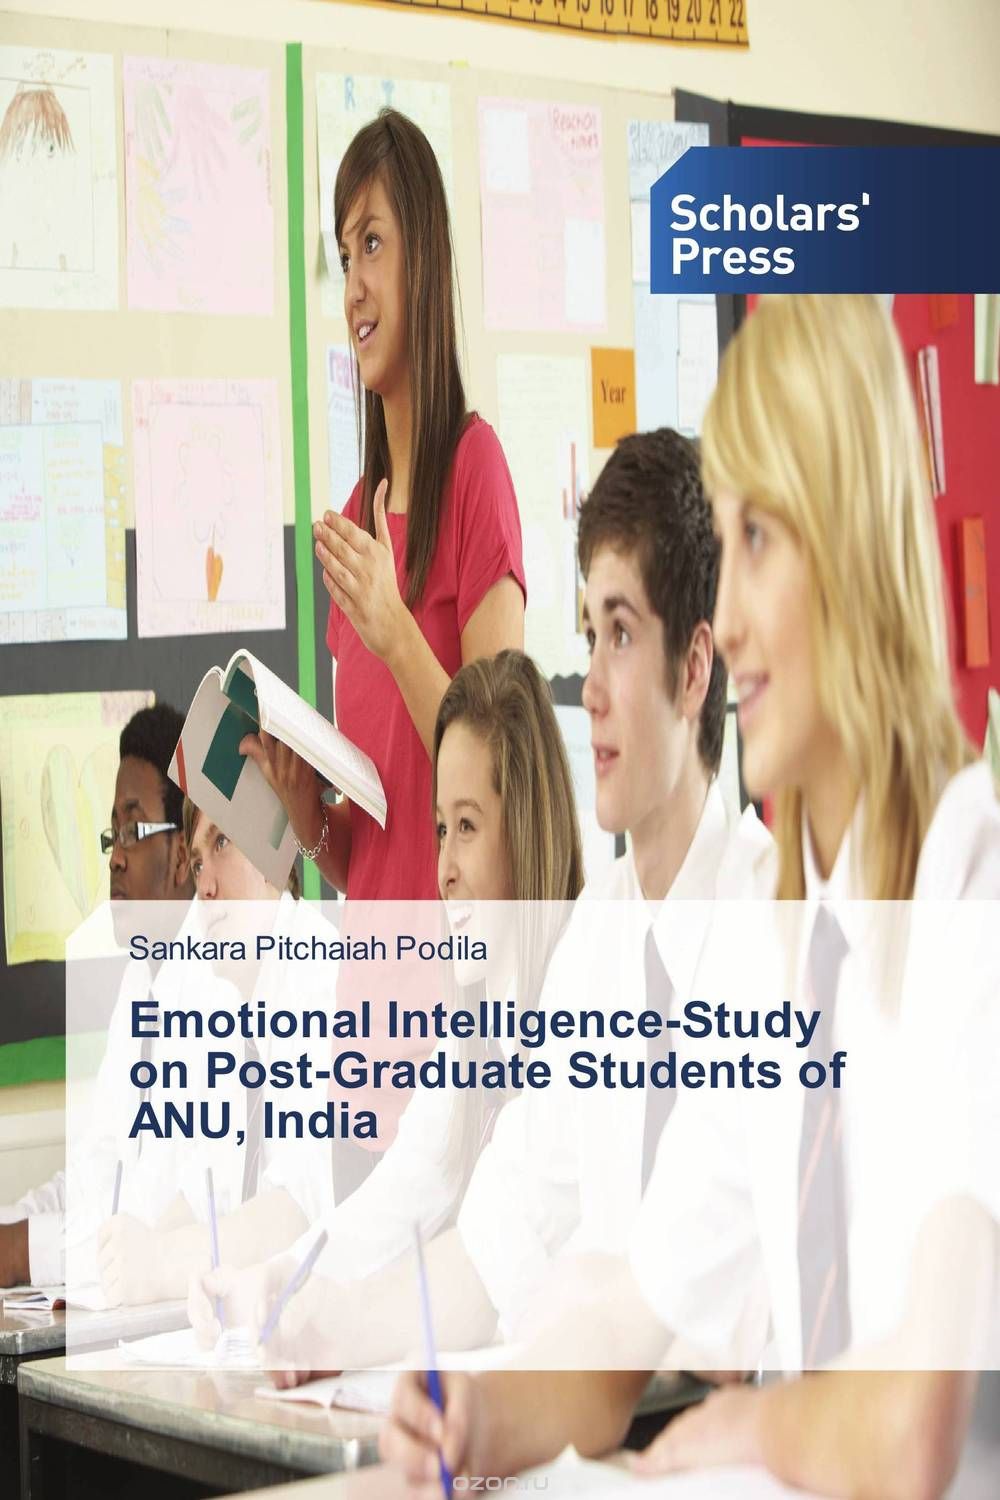 Скачать книгу "Emotional Intelligence-Study on Post-Graduate Students of ANU, India"